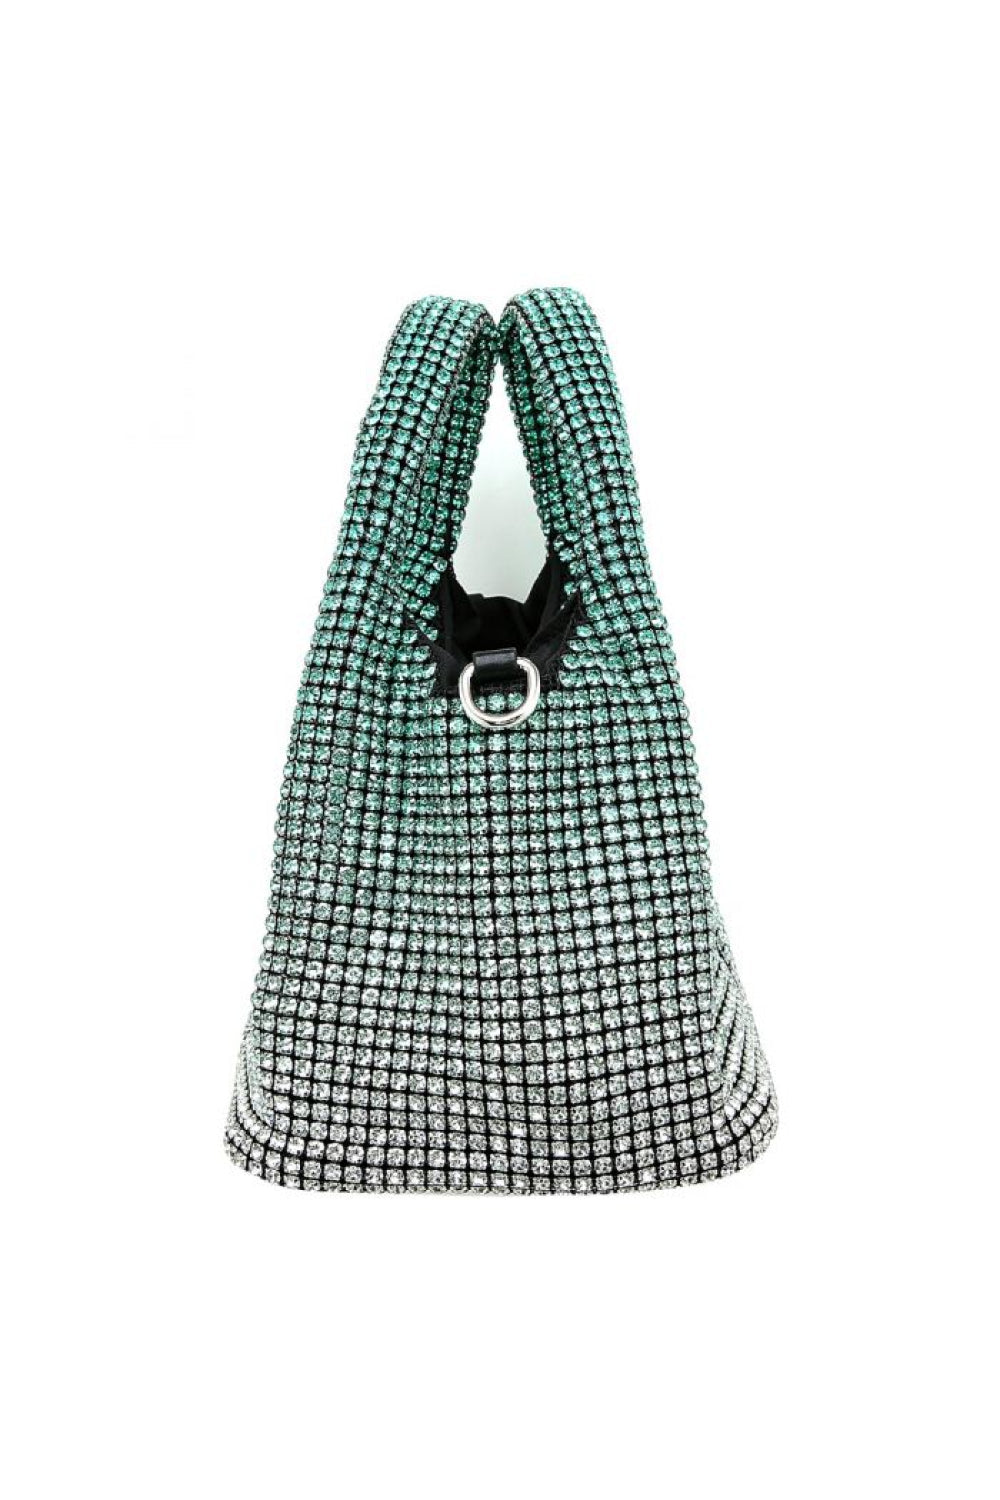 Green Crystal Top Handle Evening Bag ALP815